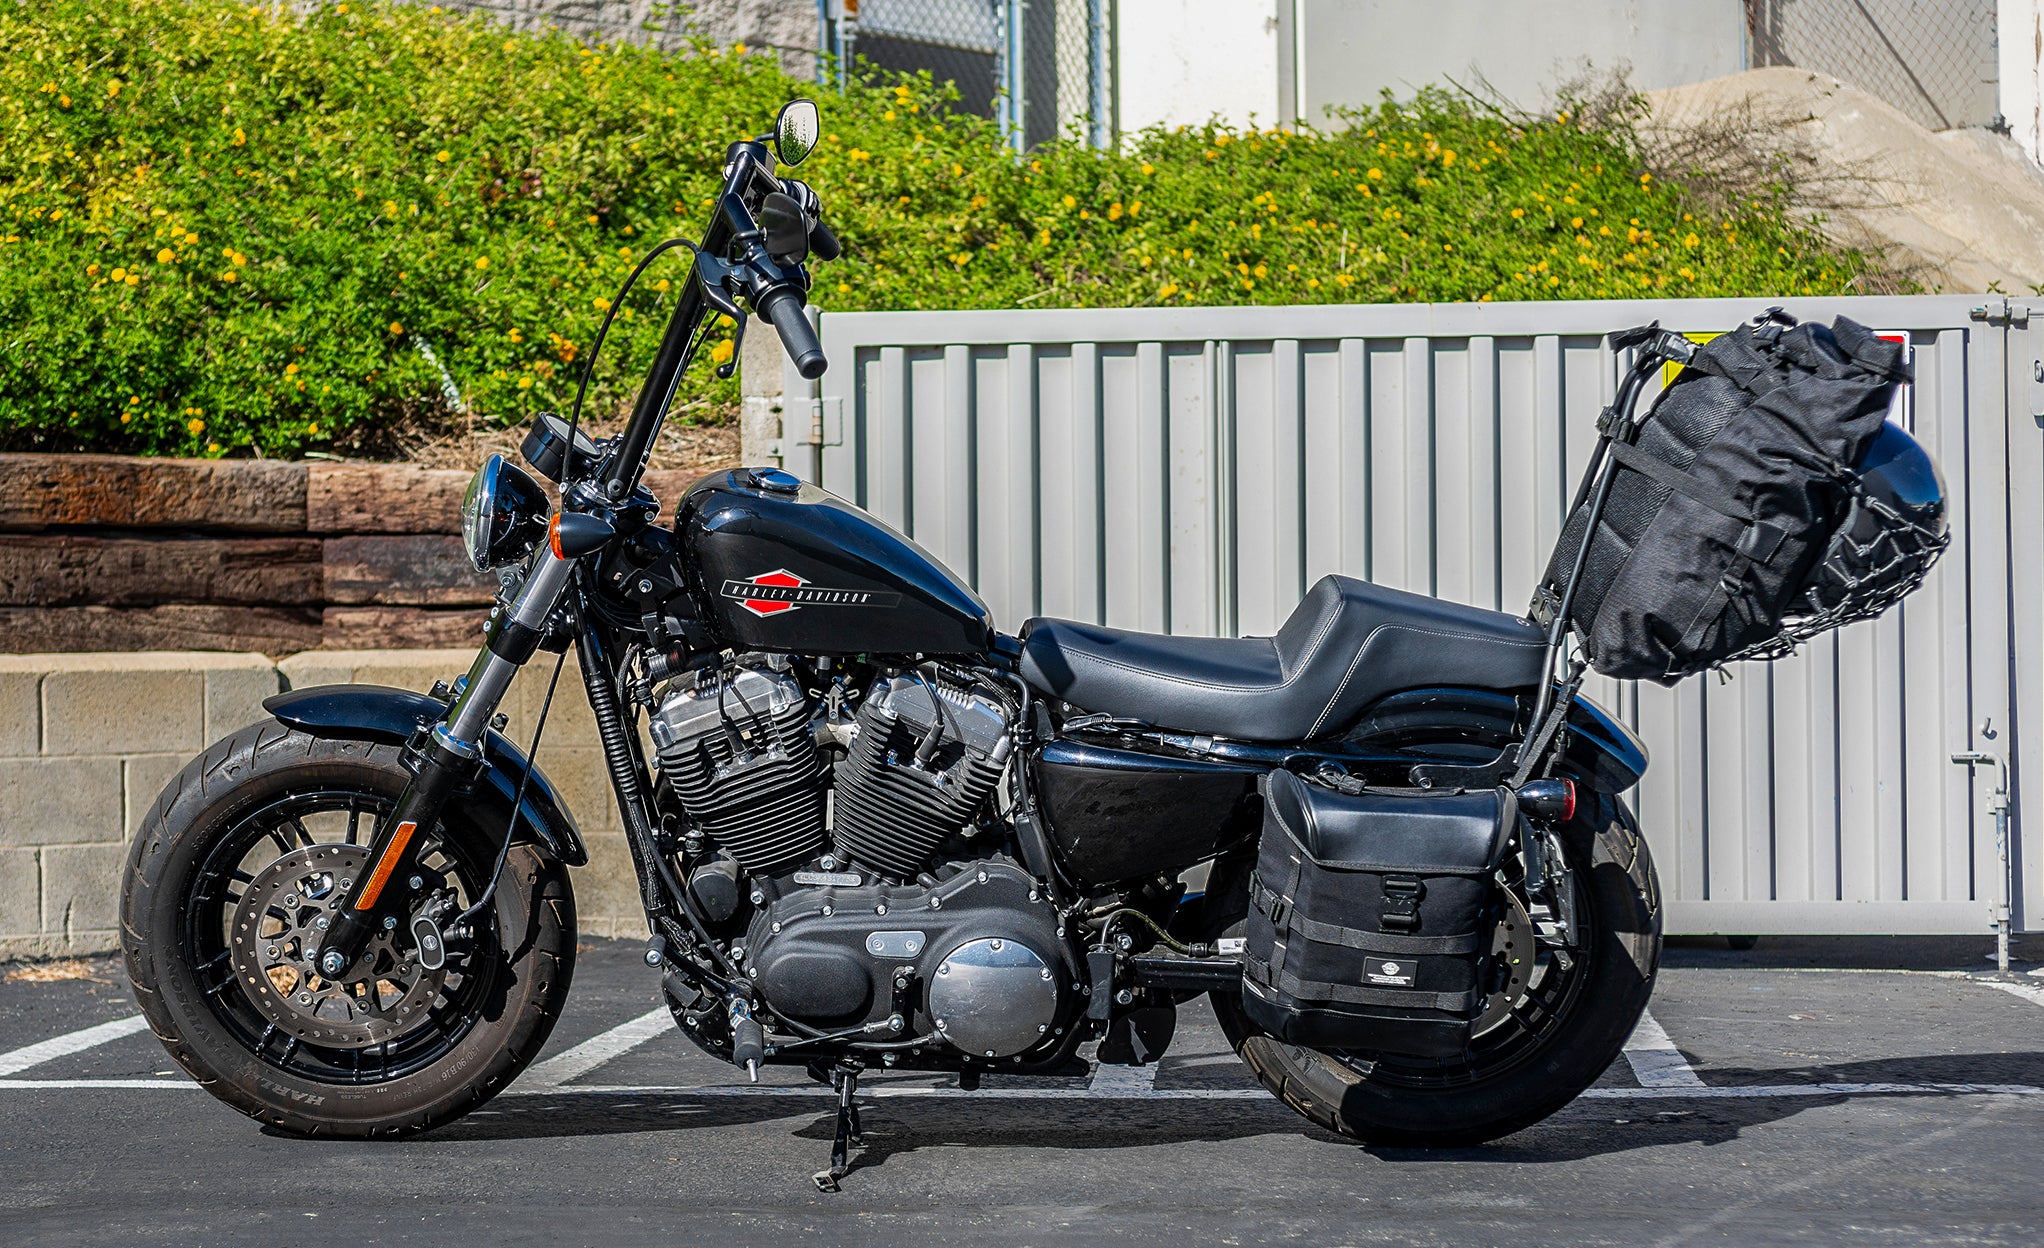 32L - Vanguard Large Dry Harley Davidson Motorcycle Sissy Bar Bag @expand